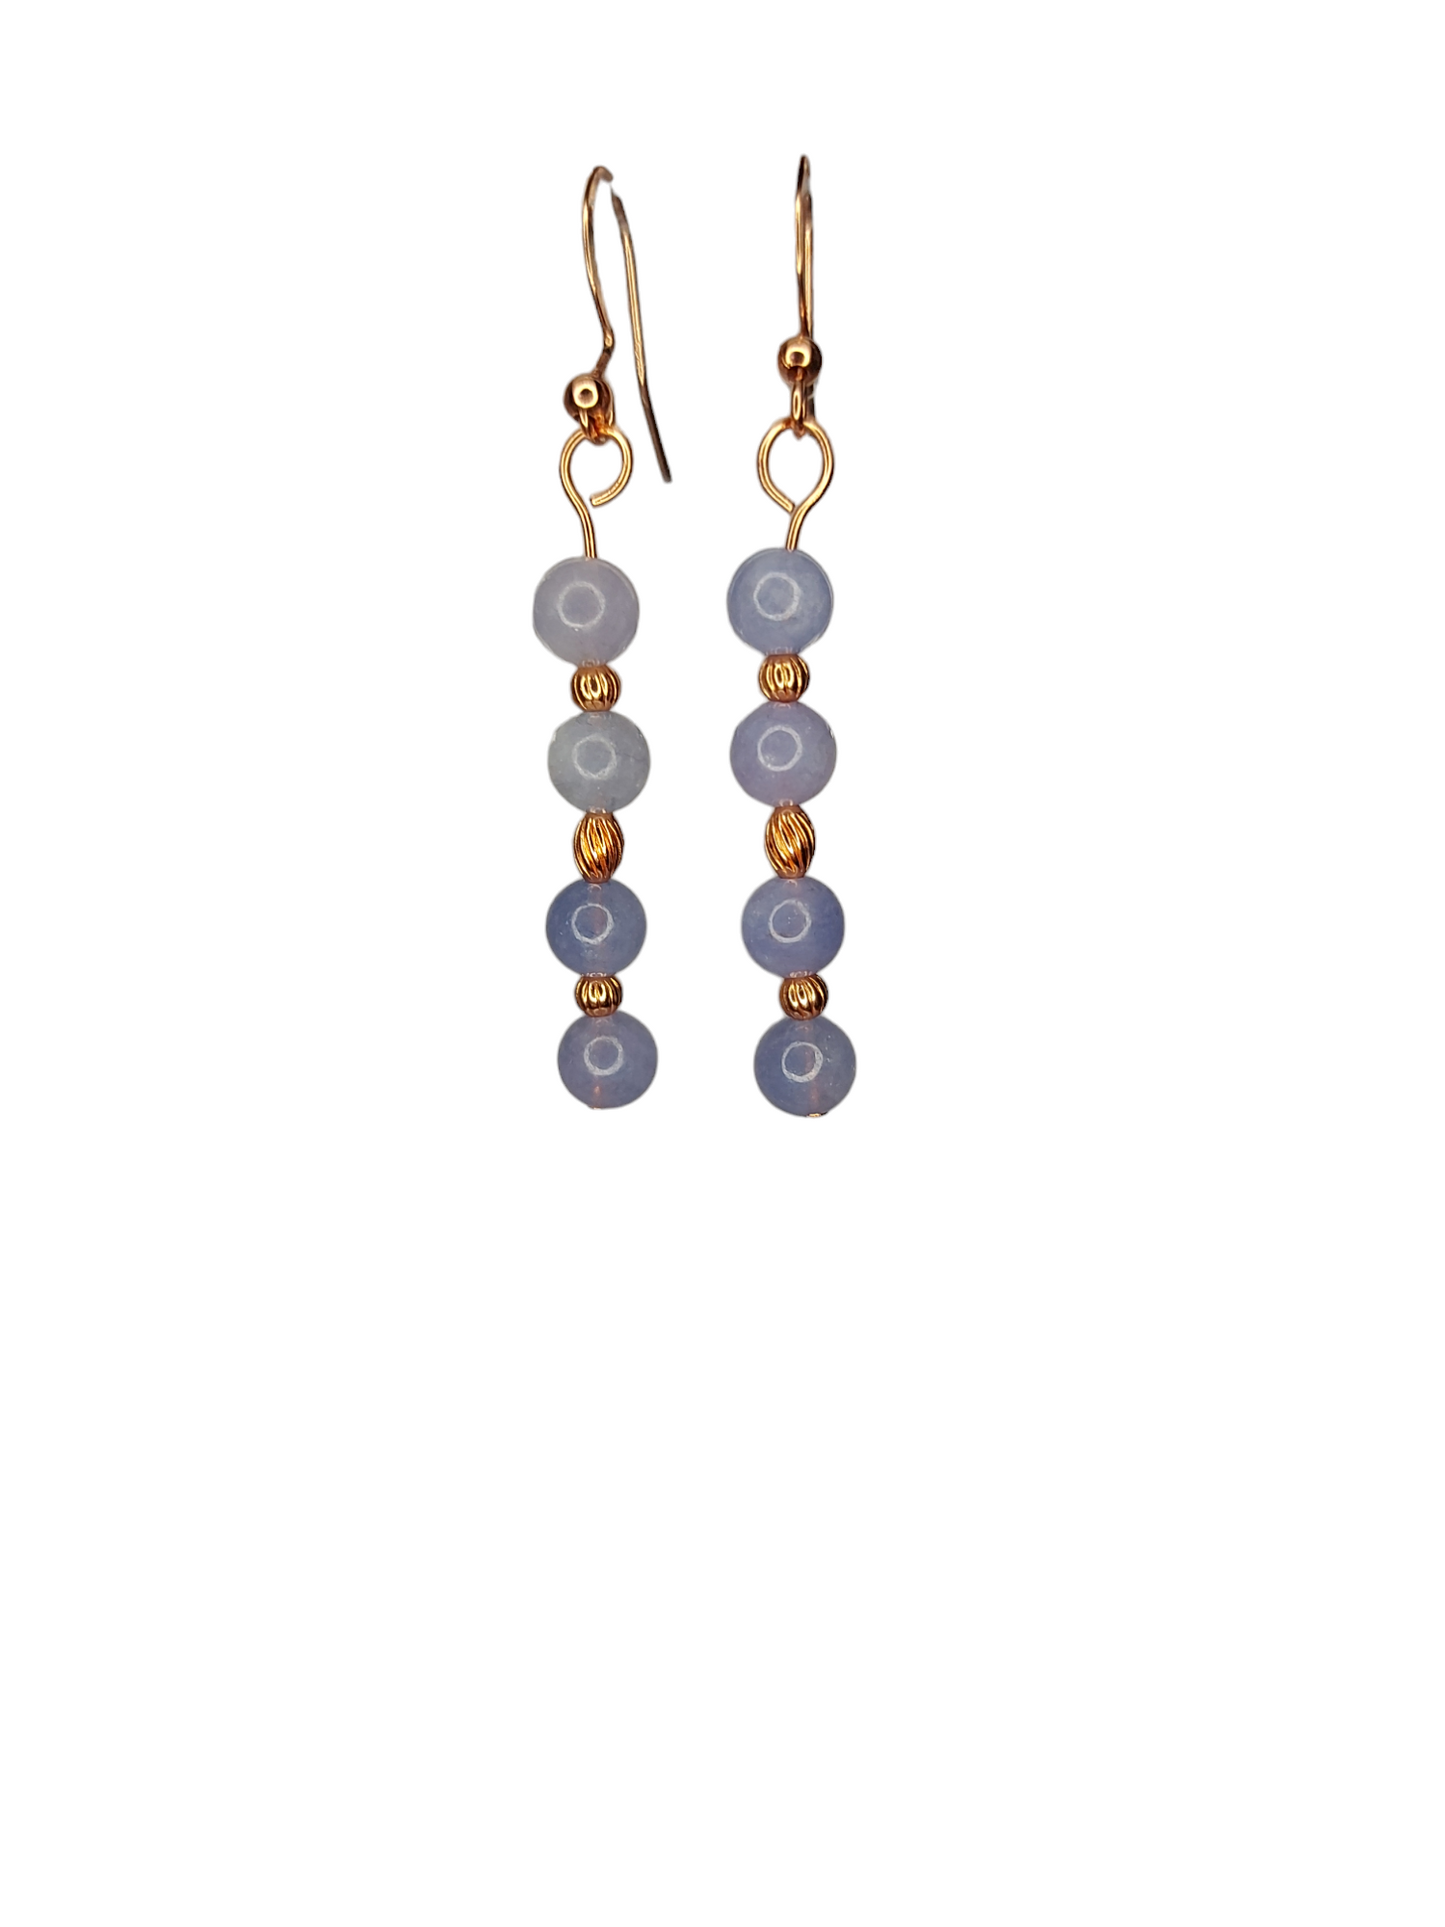 Copper Earrings with Semiprecious Gemstones